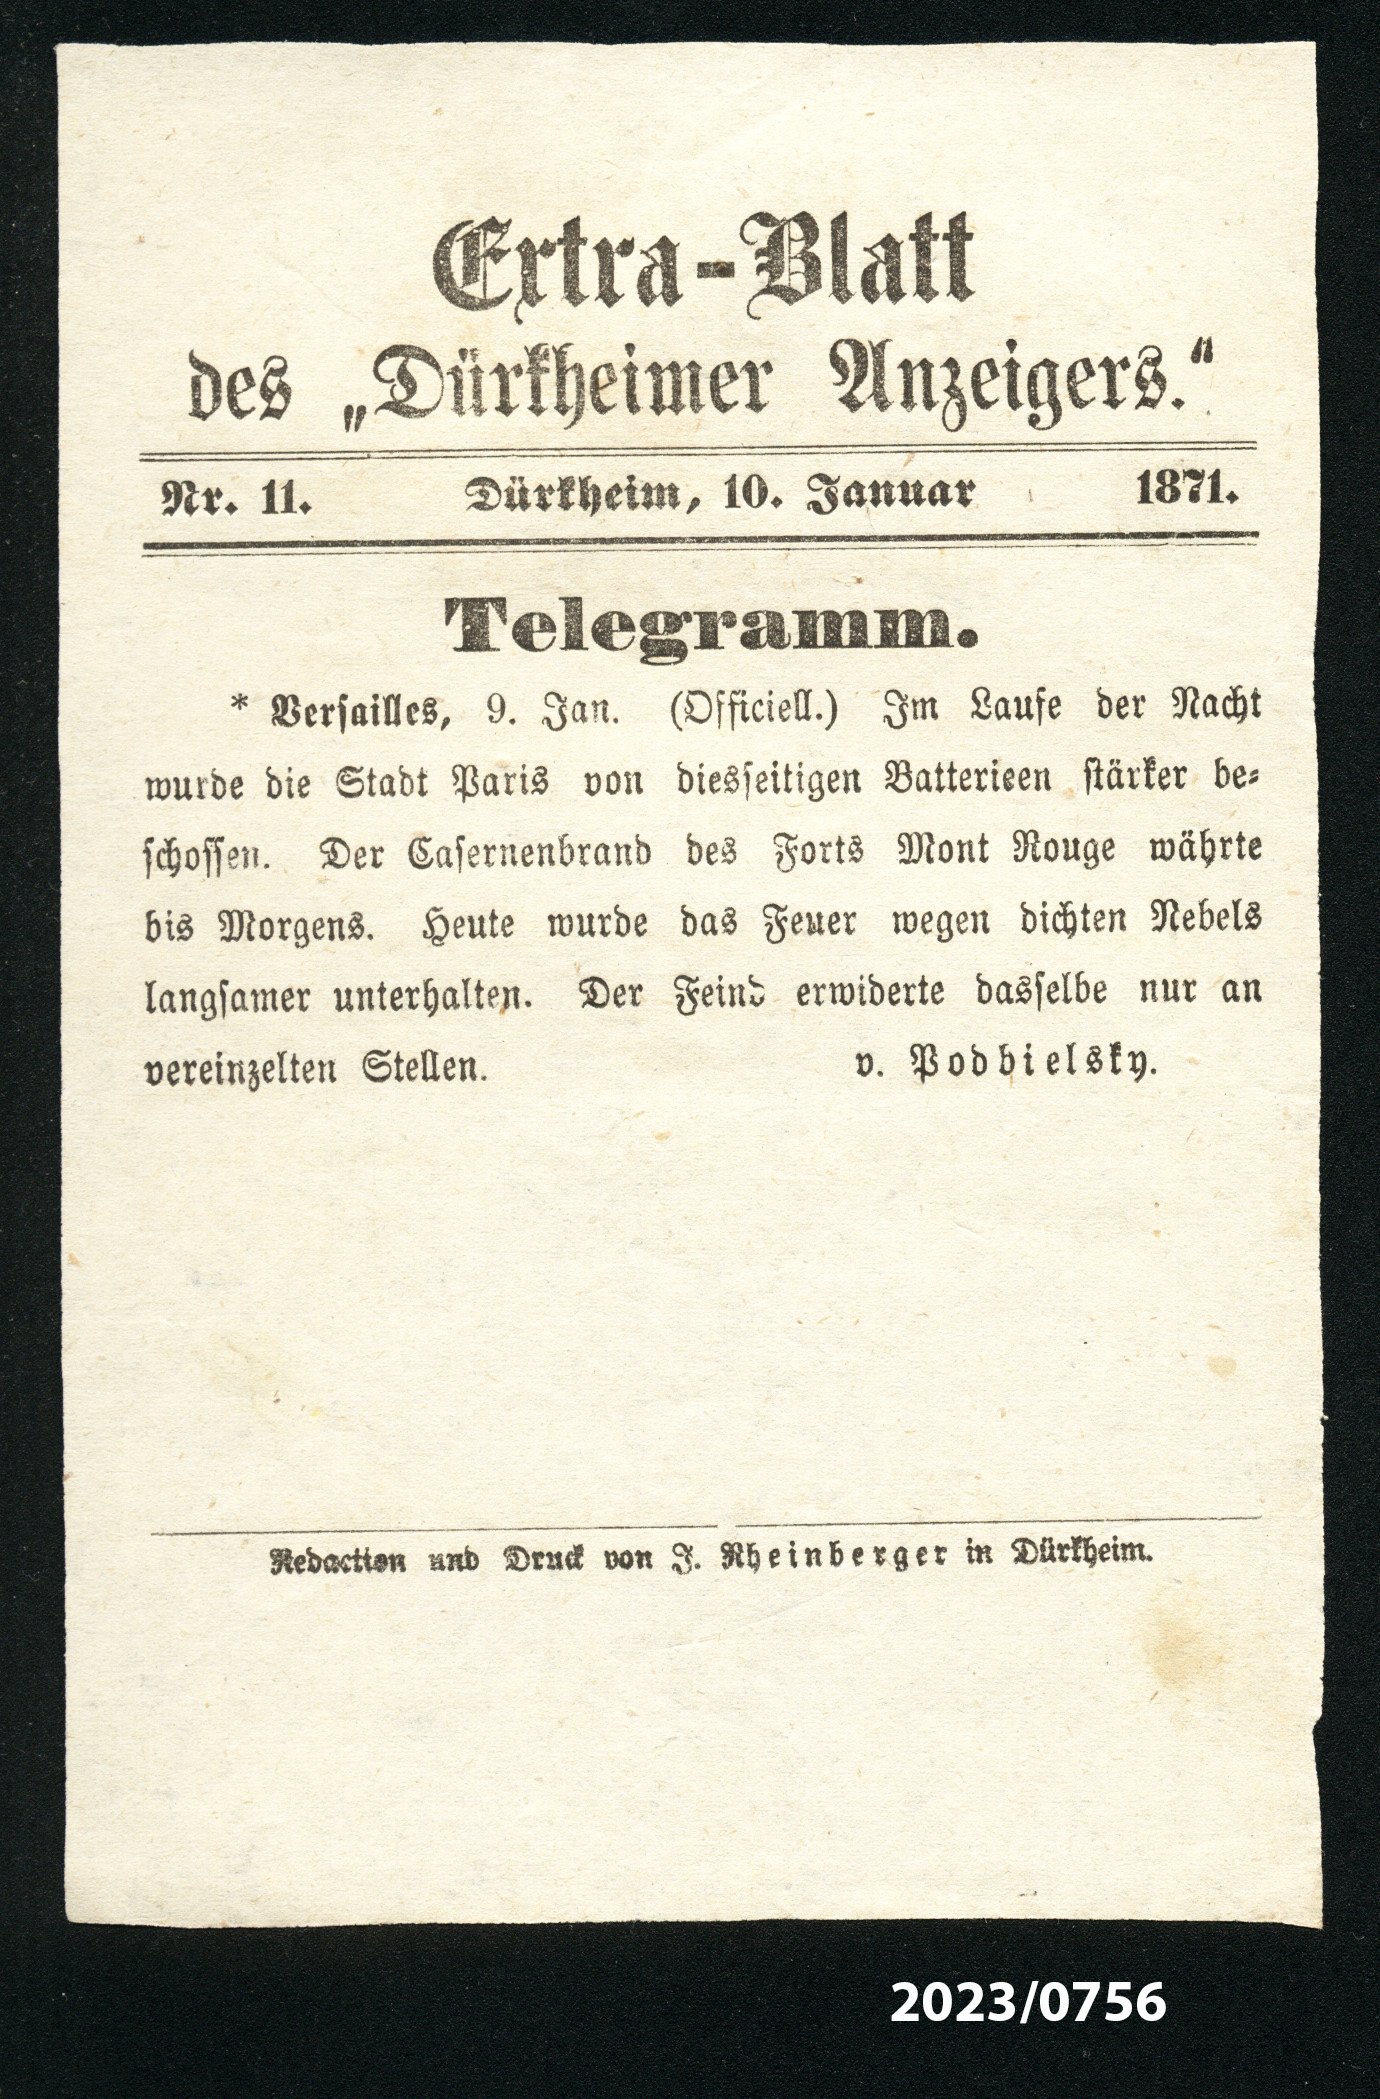 Extra-Blatt des "Dürkheimer Anzeigers." Nr. 11, 10.1.1871 (Stadtmuseum Bad Dürkheim im Kulturzentrum Haus Catoir CC BY-NC-SA)